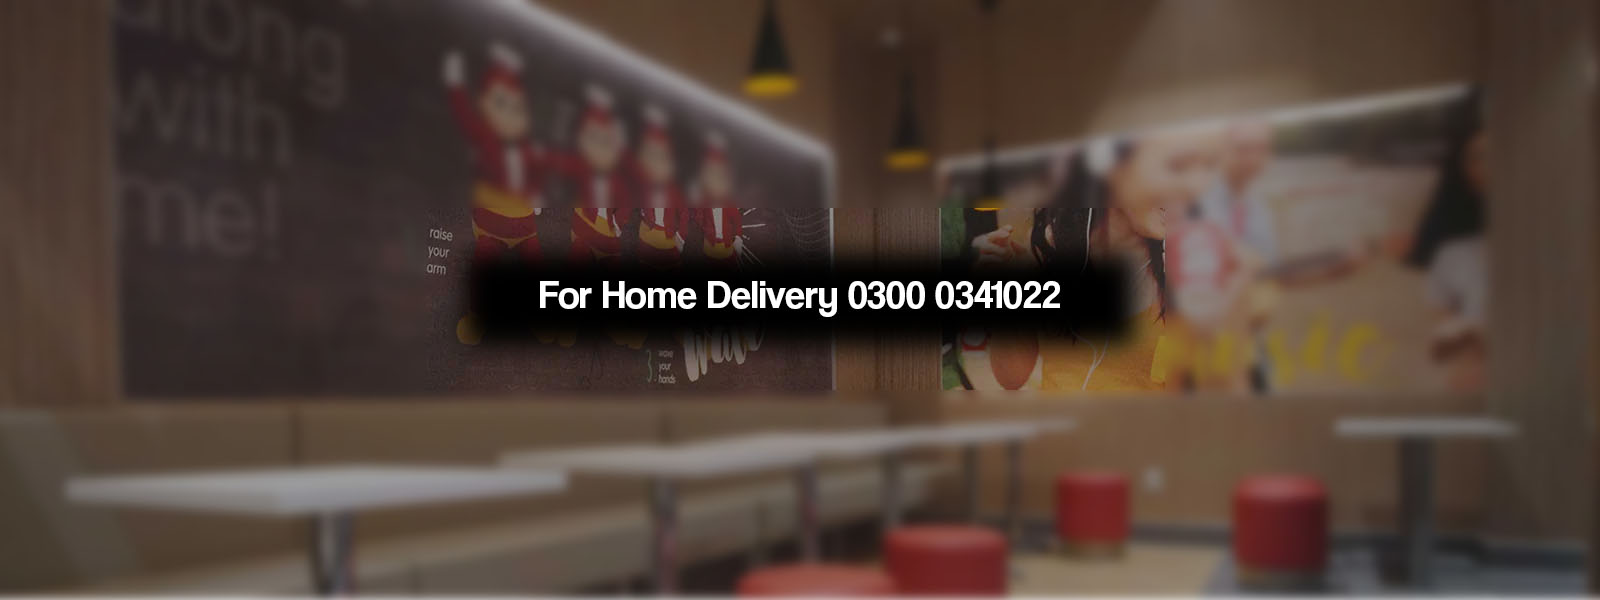 pizza-school-2-madina-town-faisalabad-to-order-call-0300-0341022